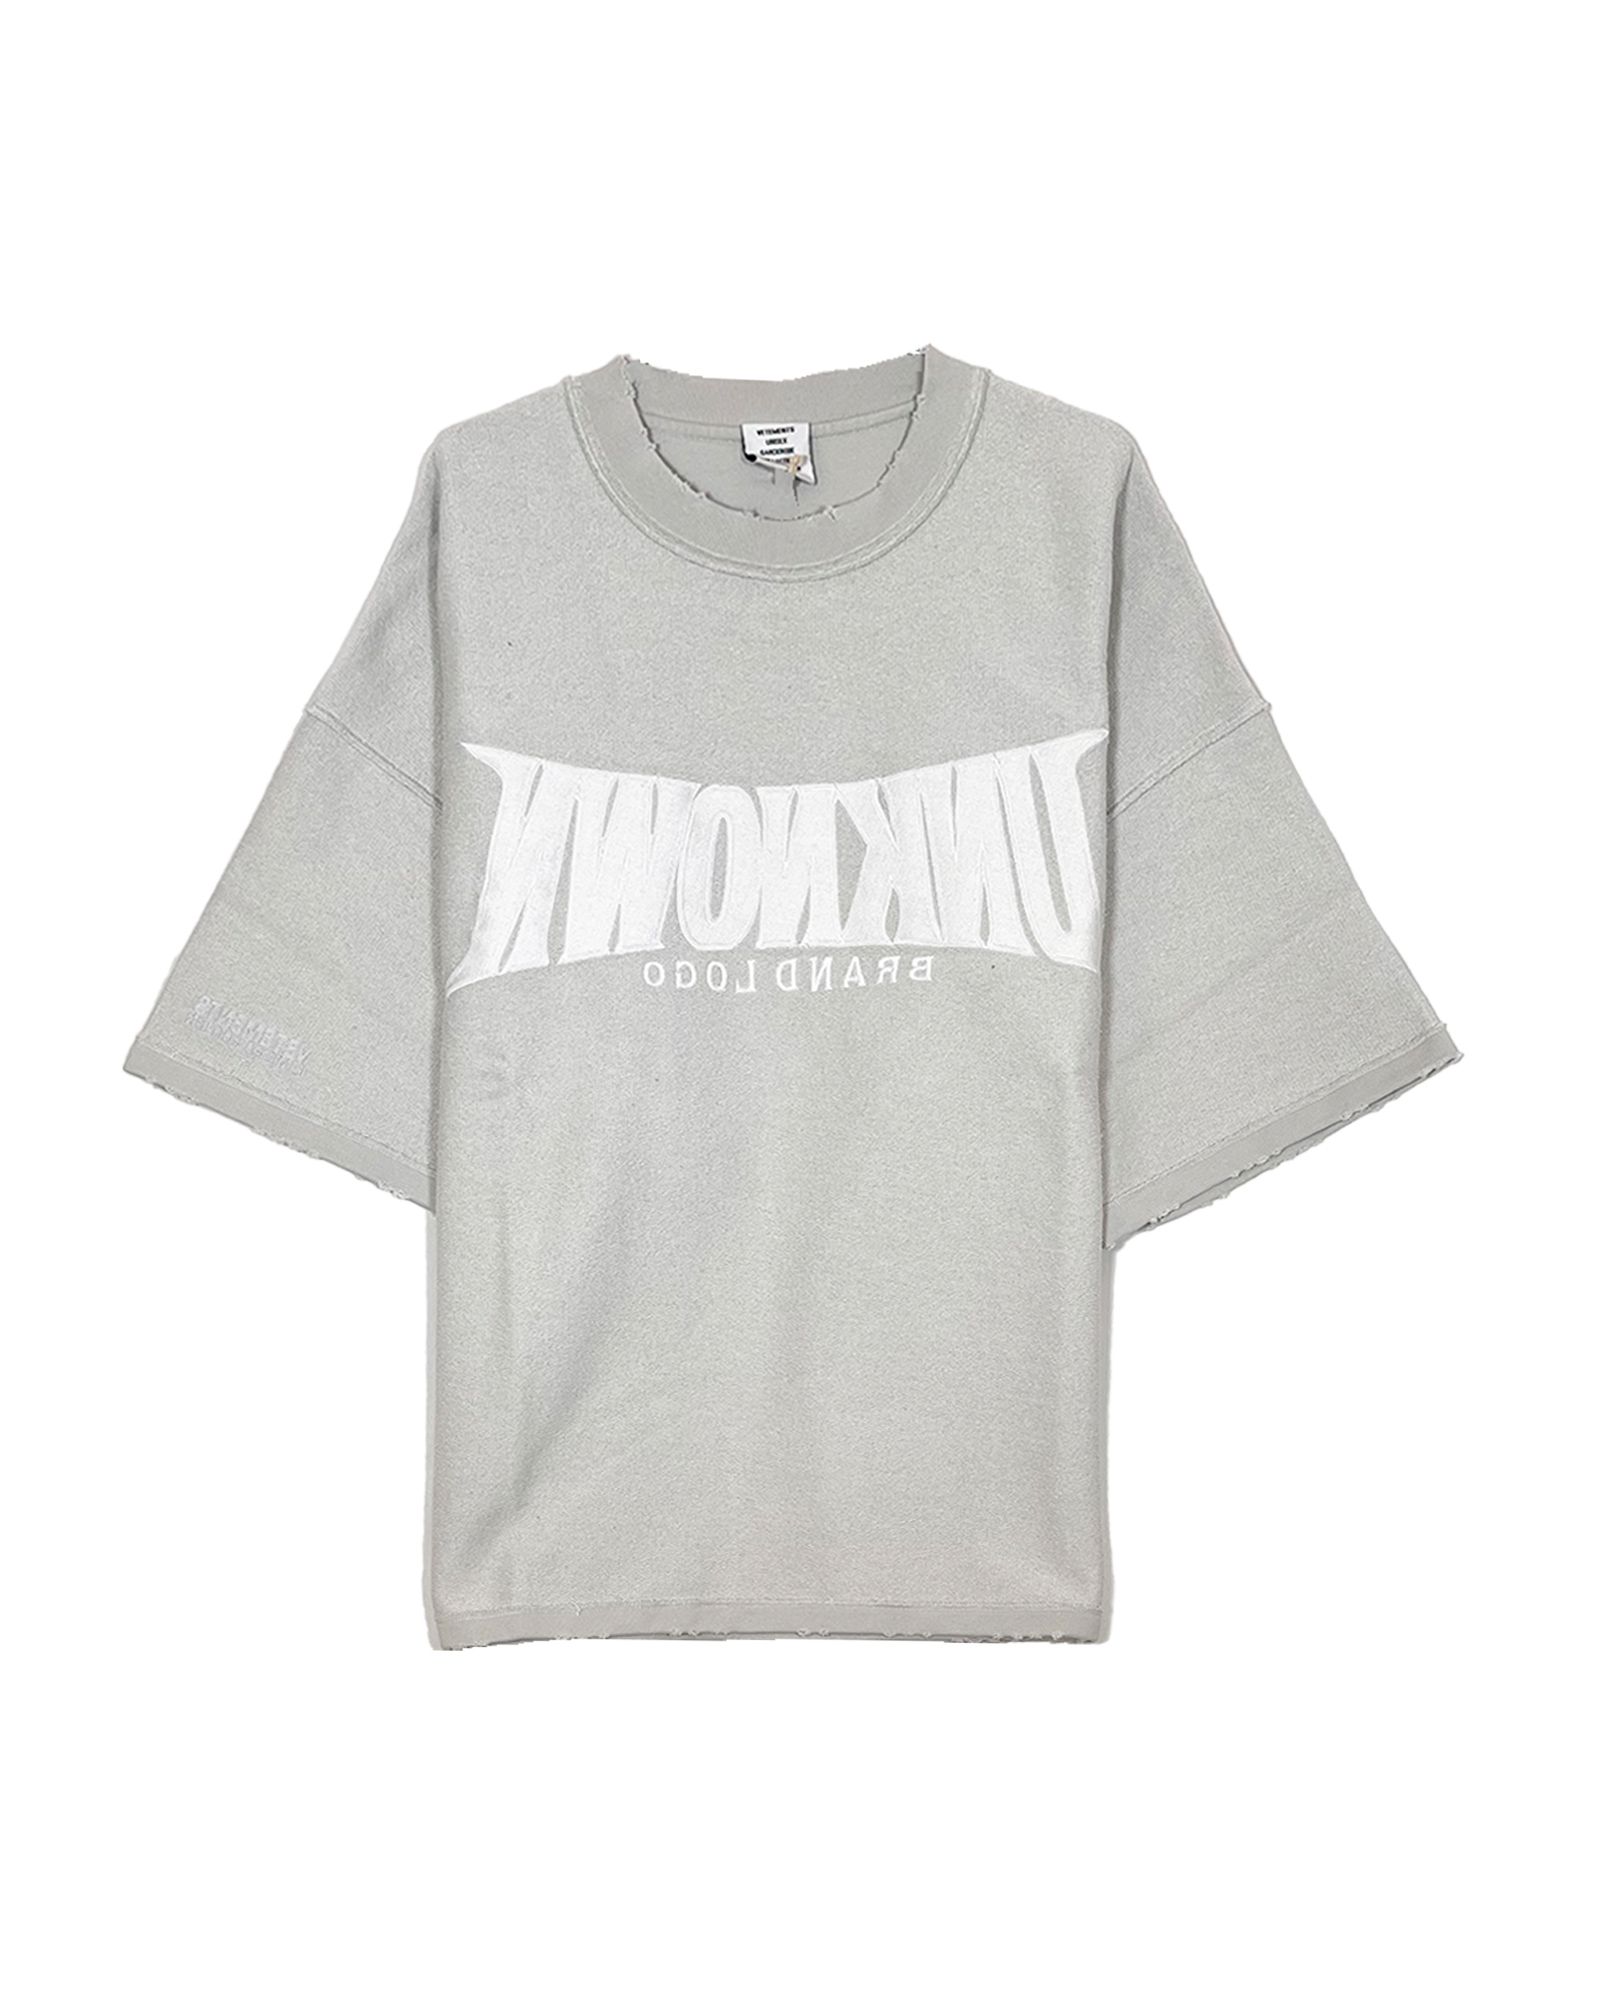 Inverted logo molton t-shirt (ロゴプリントTシャツ) Oyster mushroom - XS